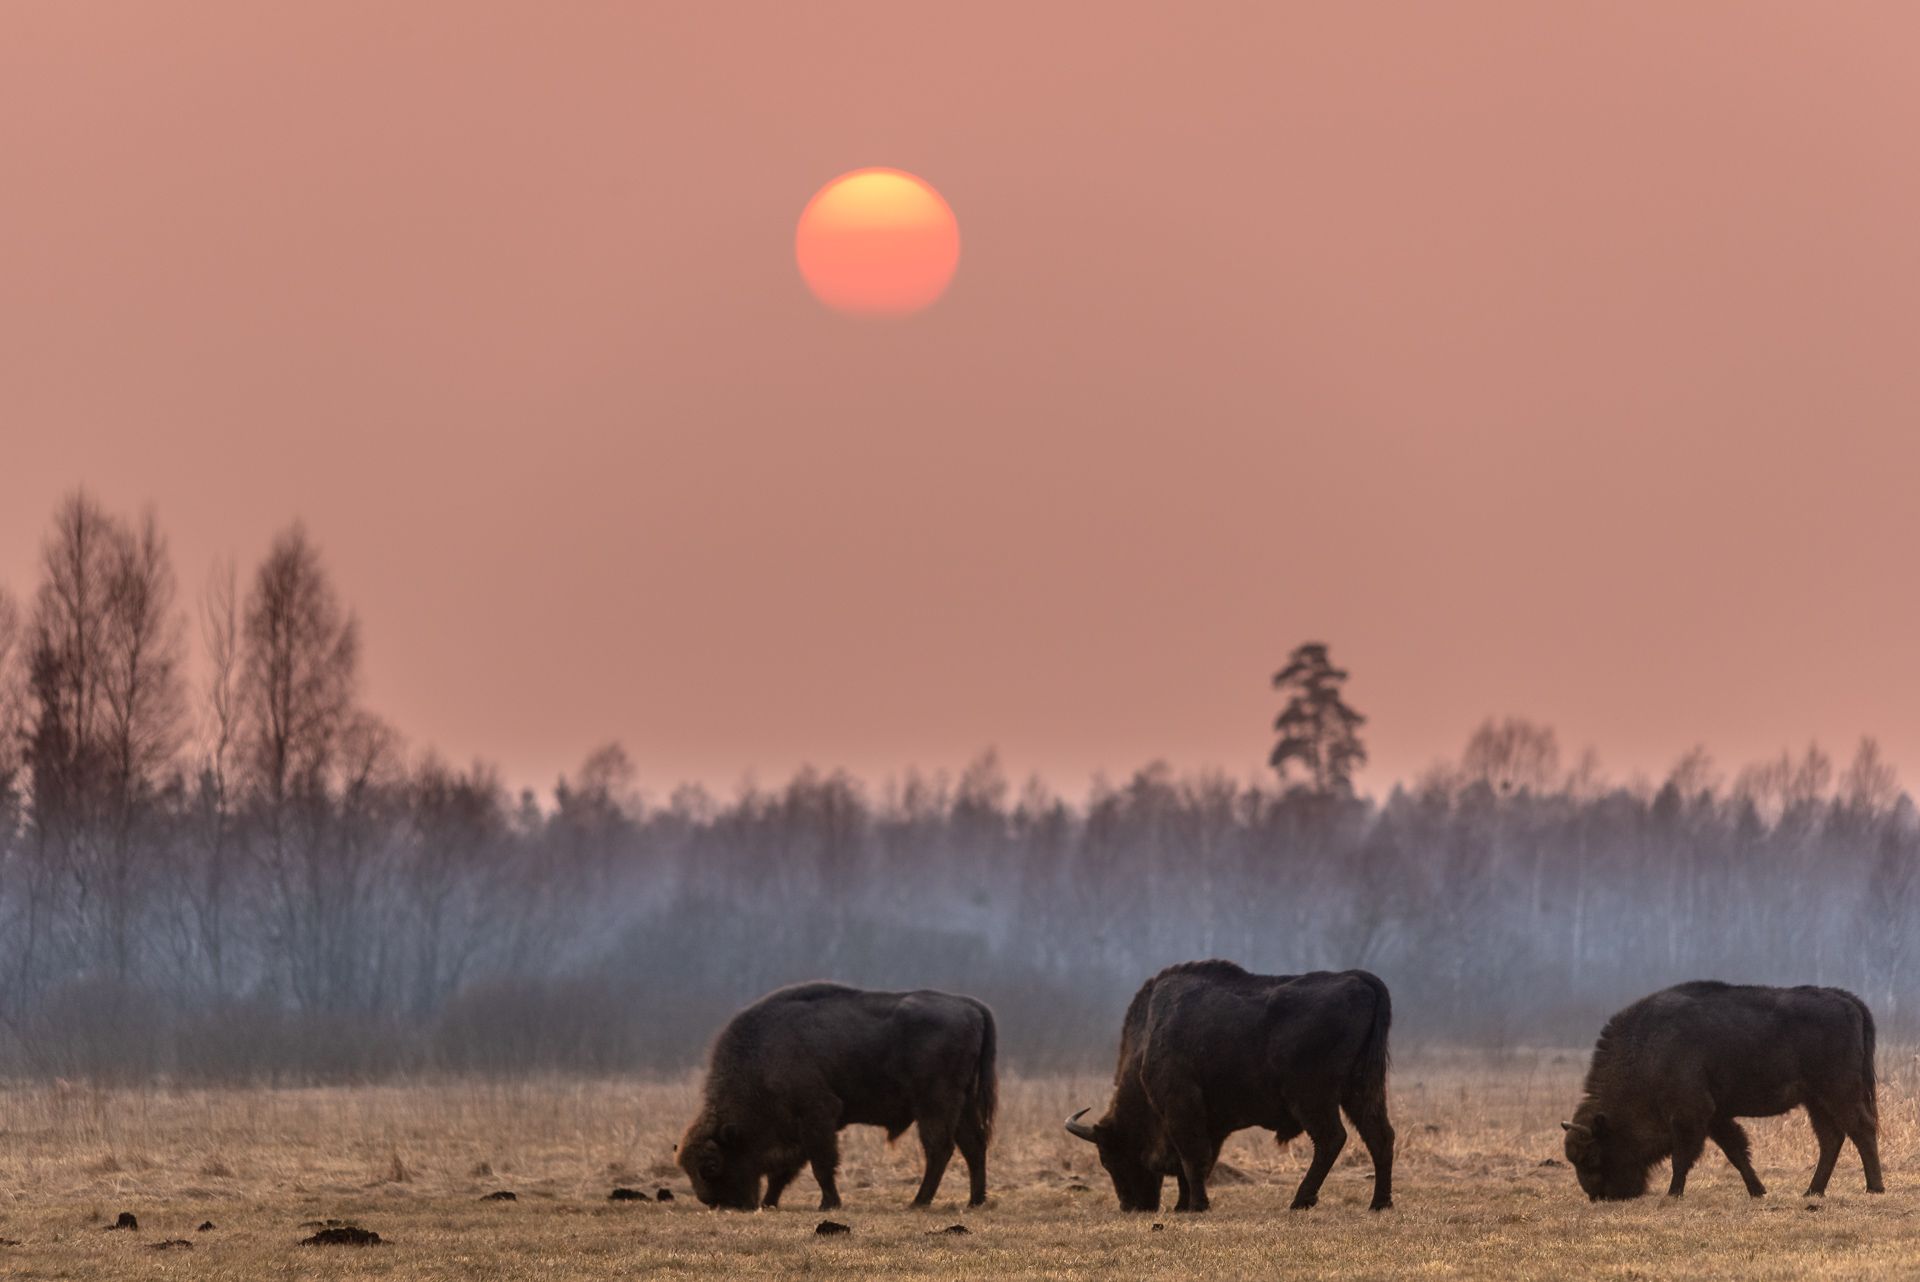 Afternoon bisons